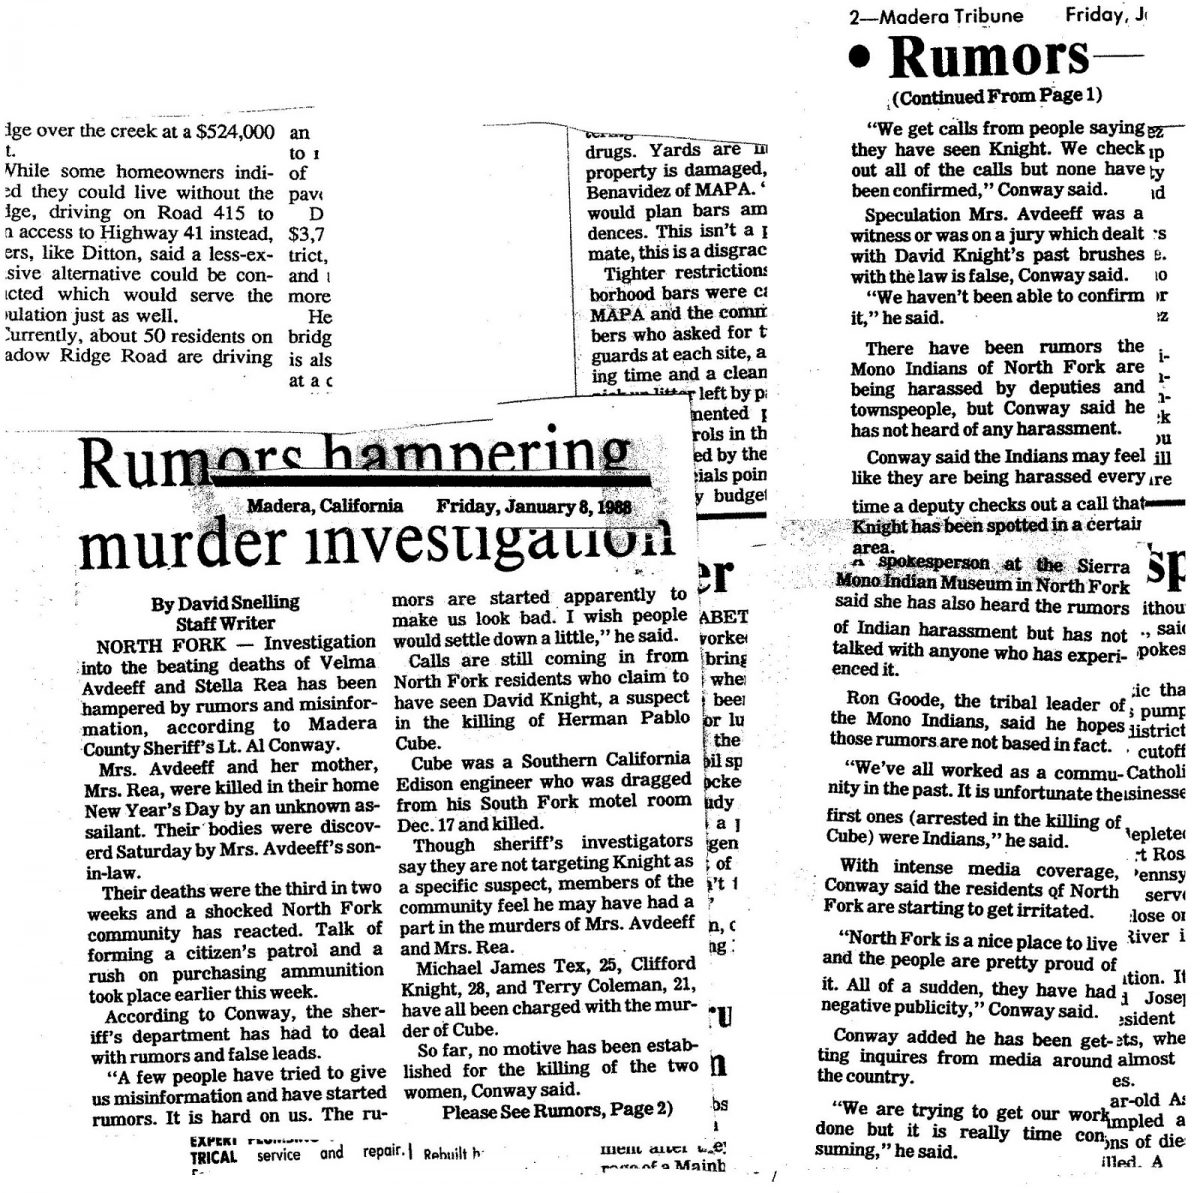 Rumors hamper investigation - Madera Tribune article